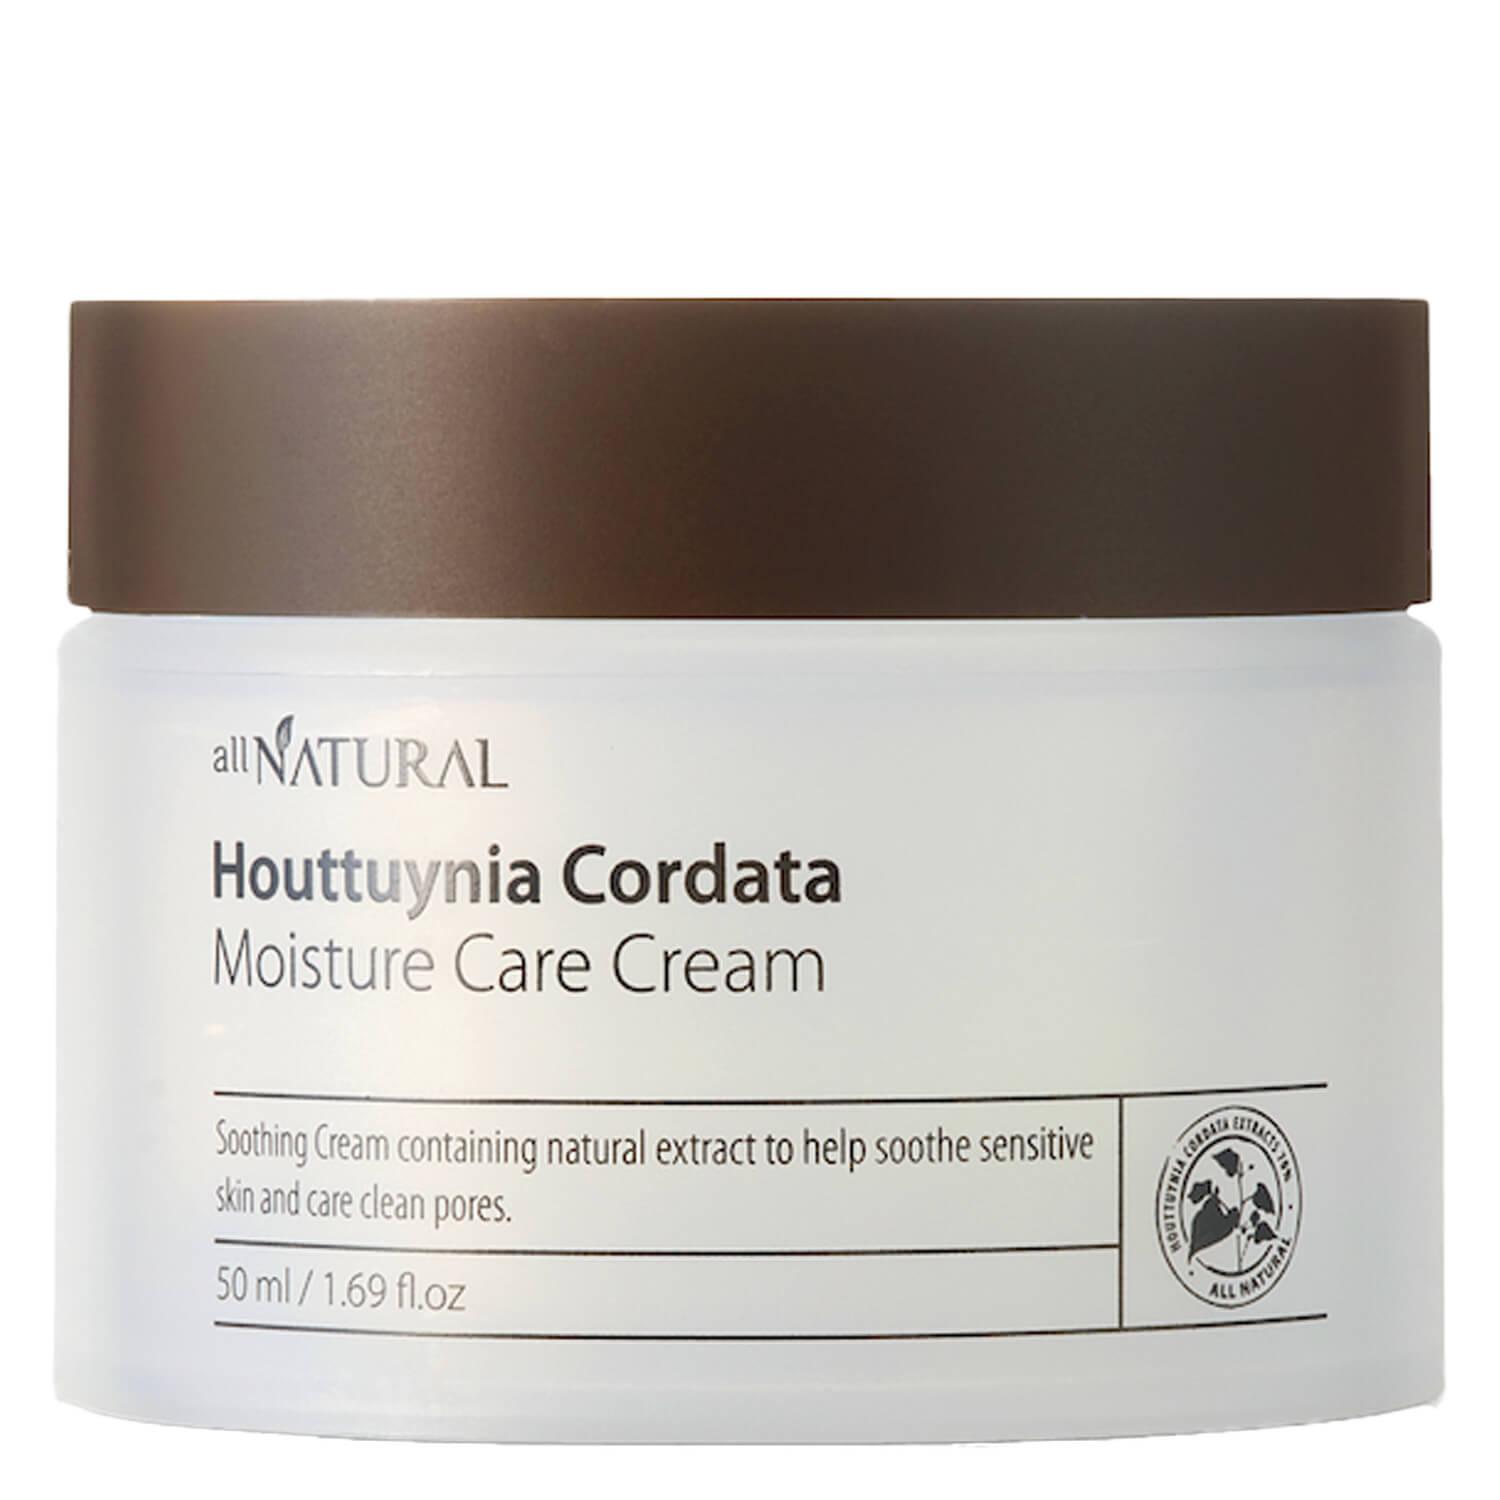 all NATURAL - Houttuynia Cordata Moisture Care Cream